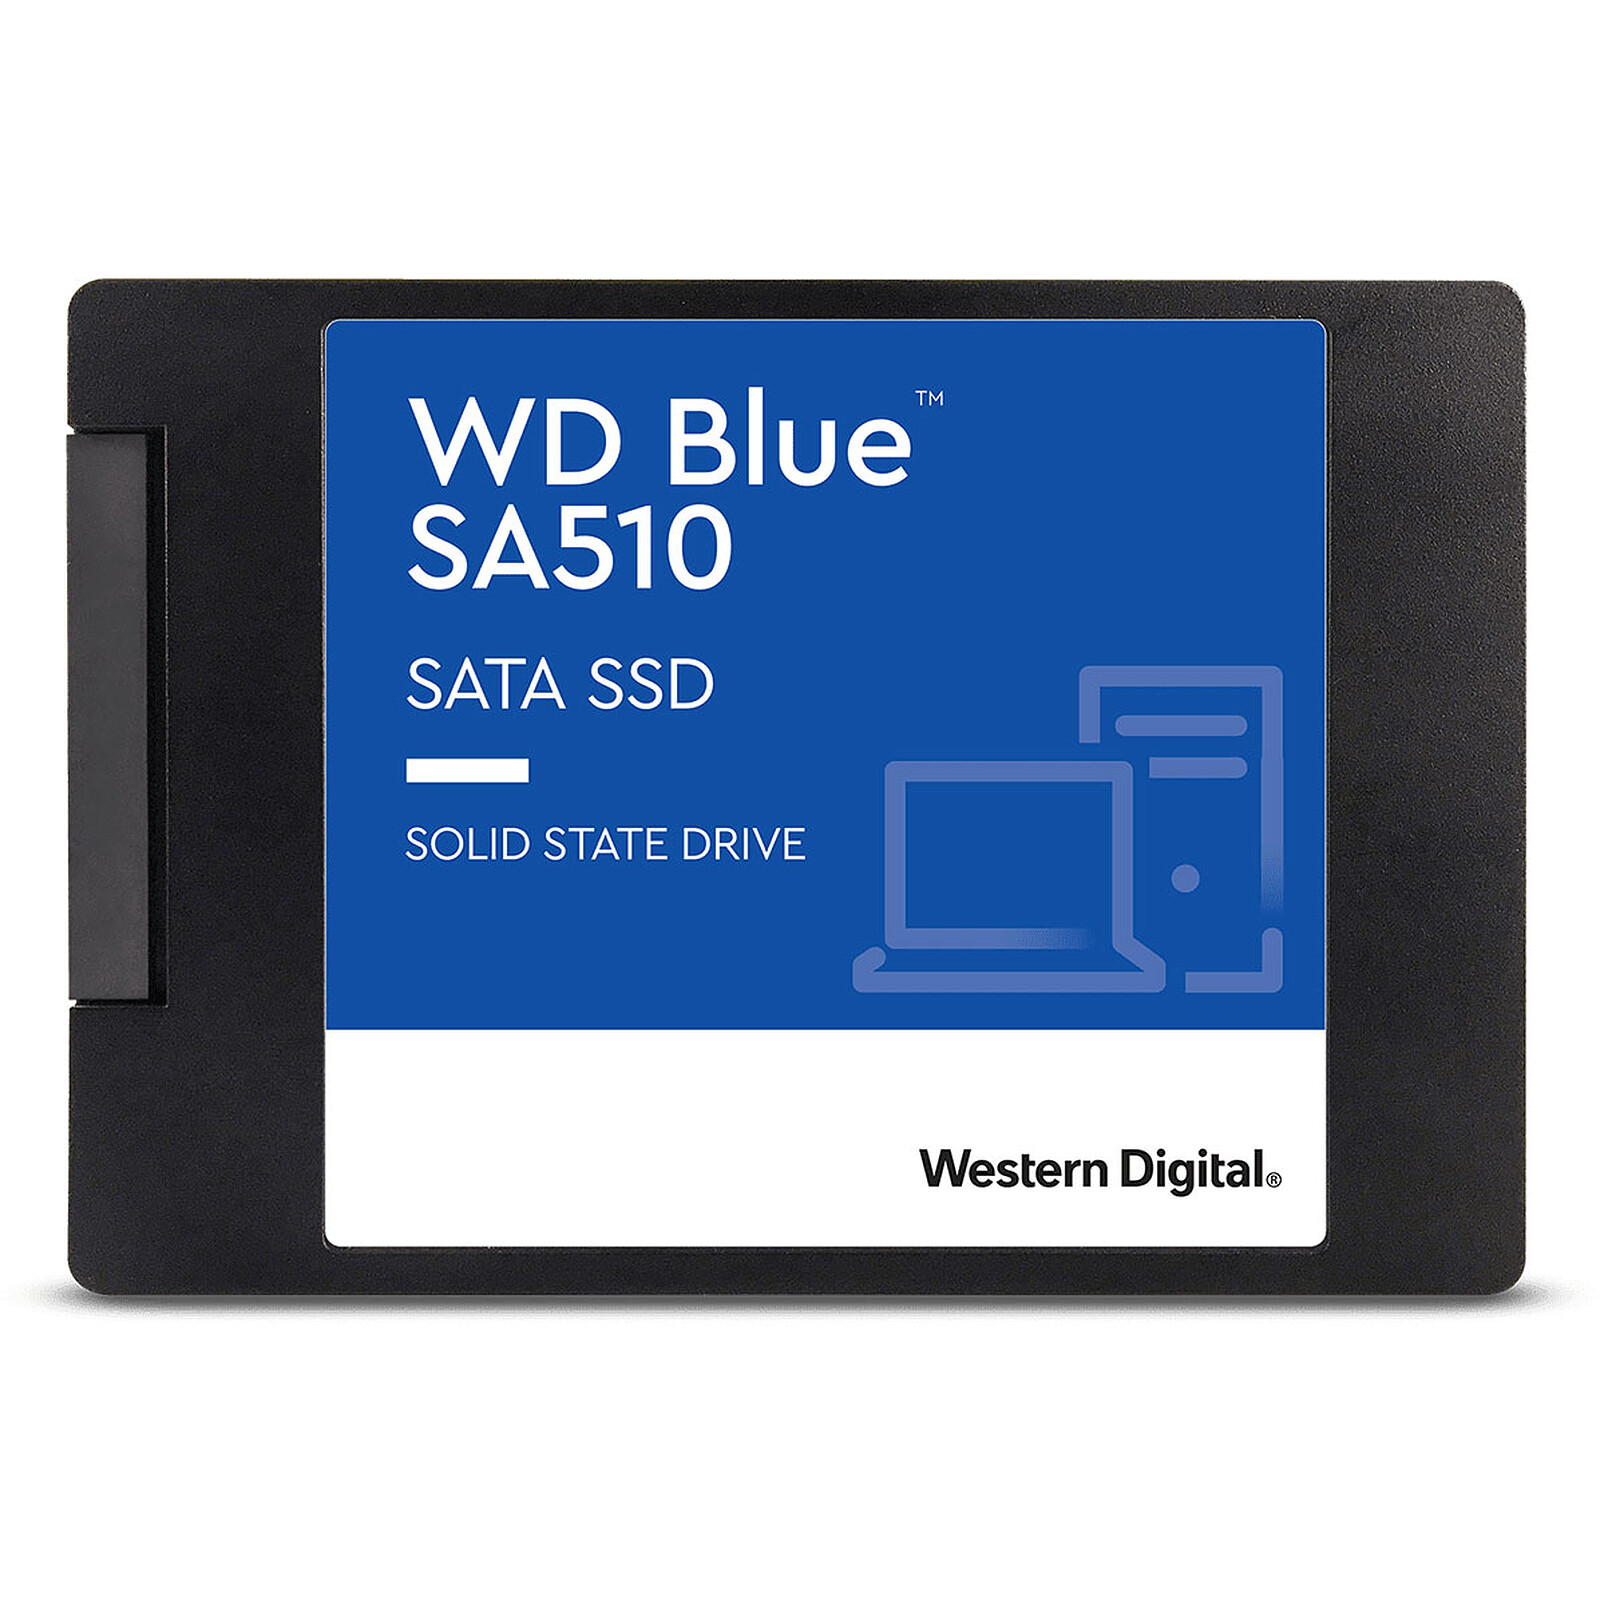 SanDisk SSD Ultra 3d Solid State 250Go 2,5